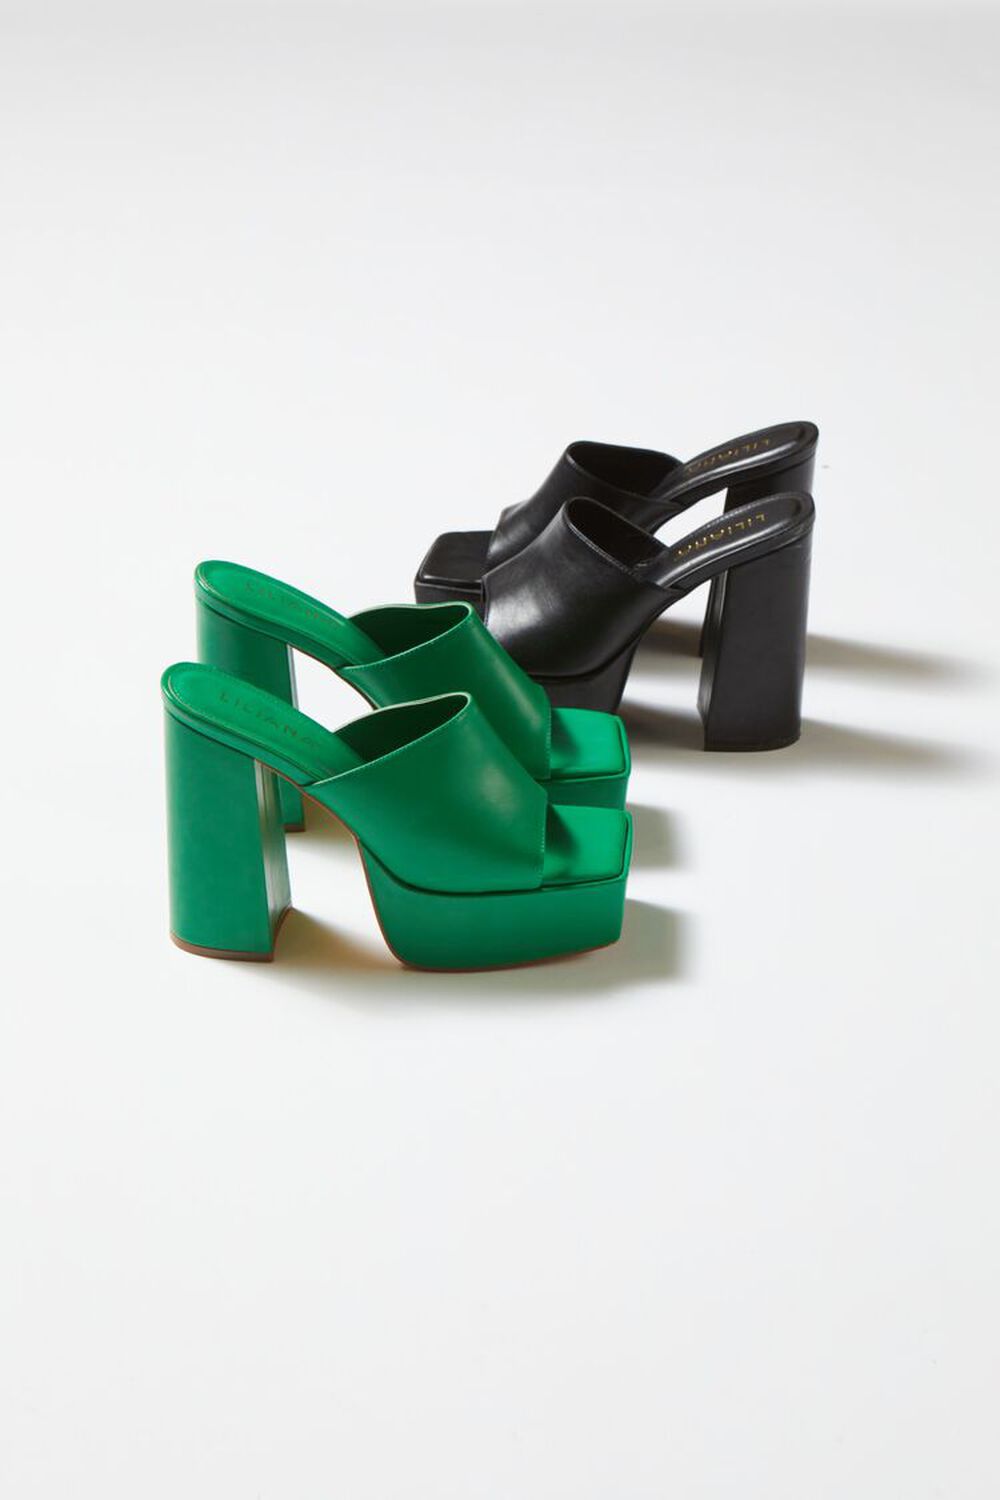 GREEN Slip-On Platform Heels, image 1